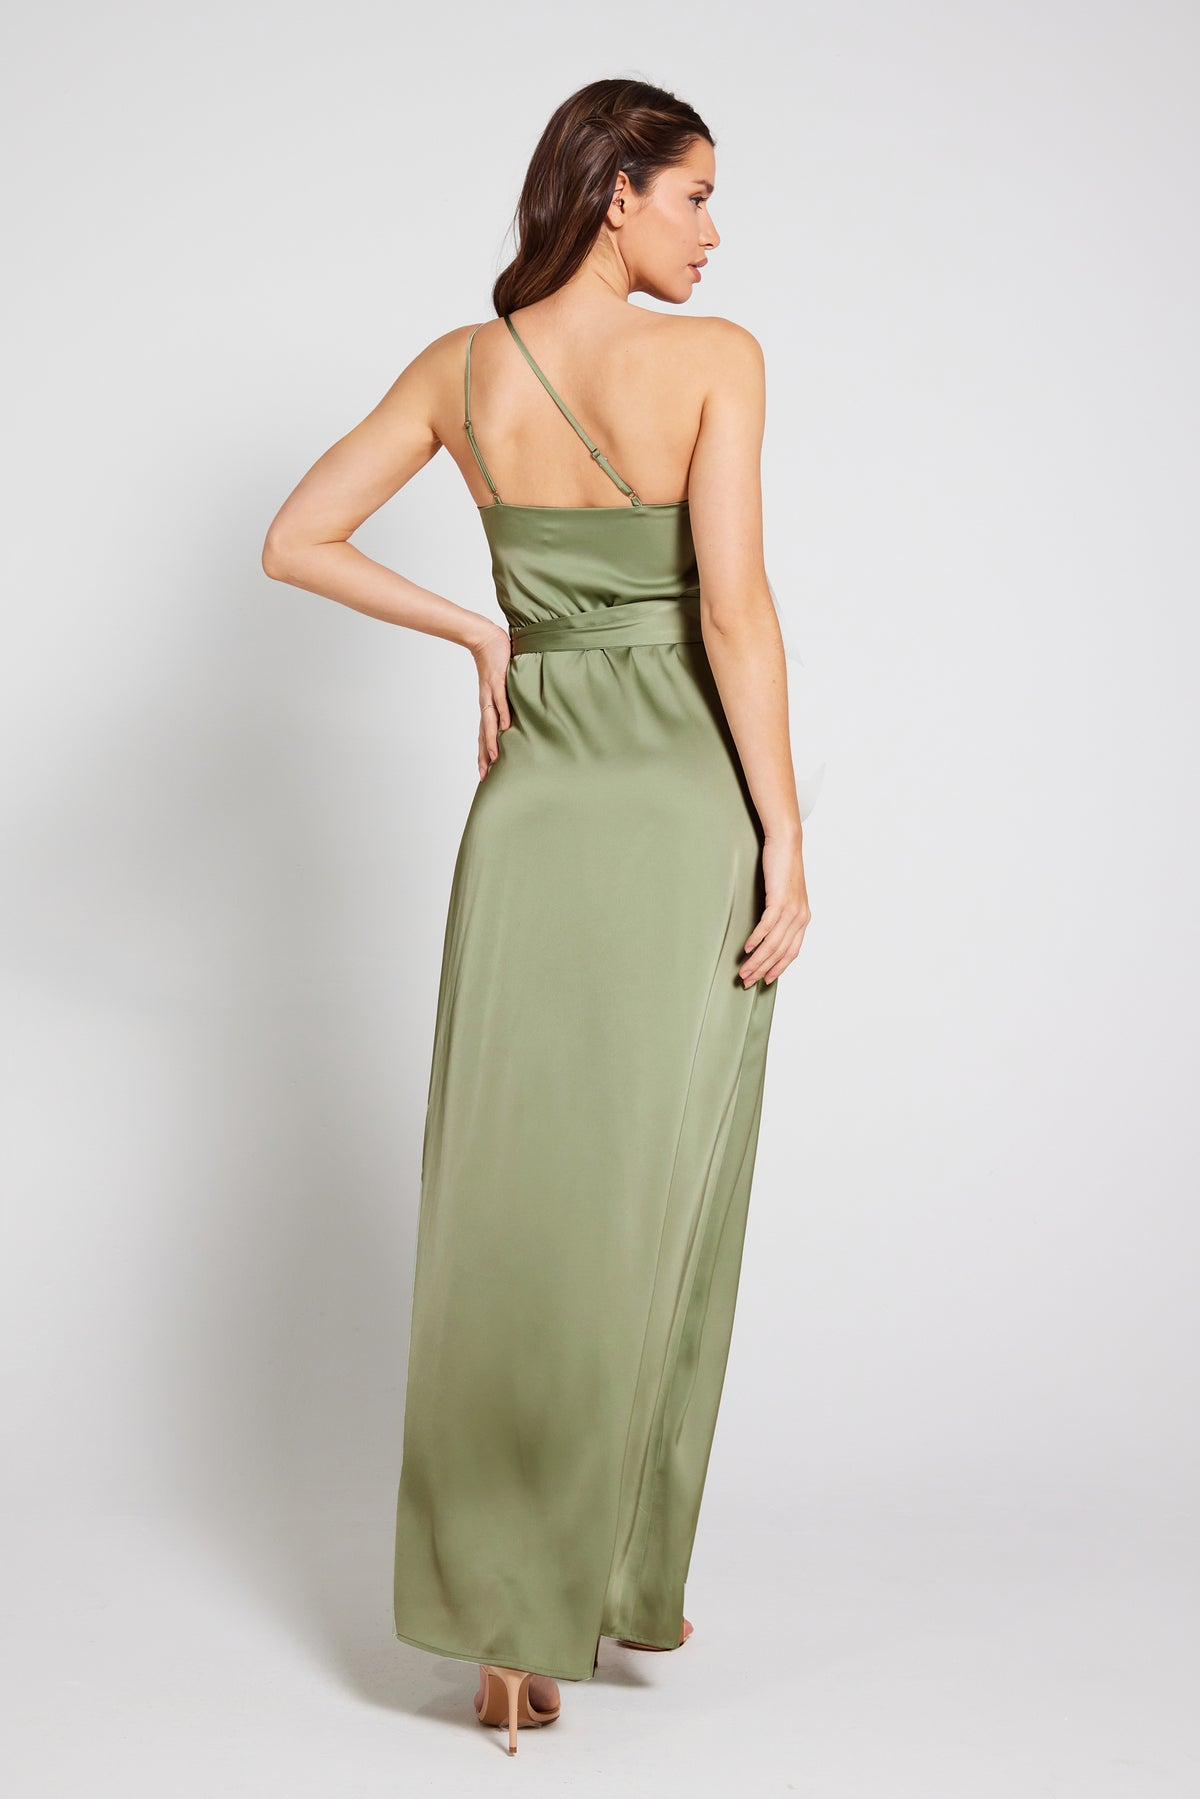 Aria One Shoulder Maxi Dress - Olive